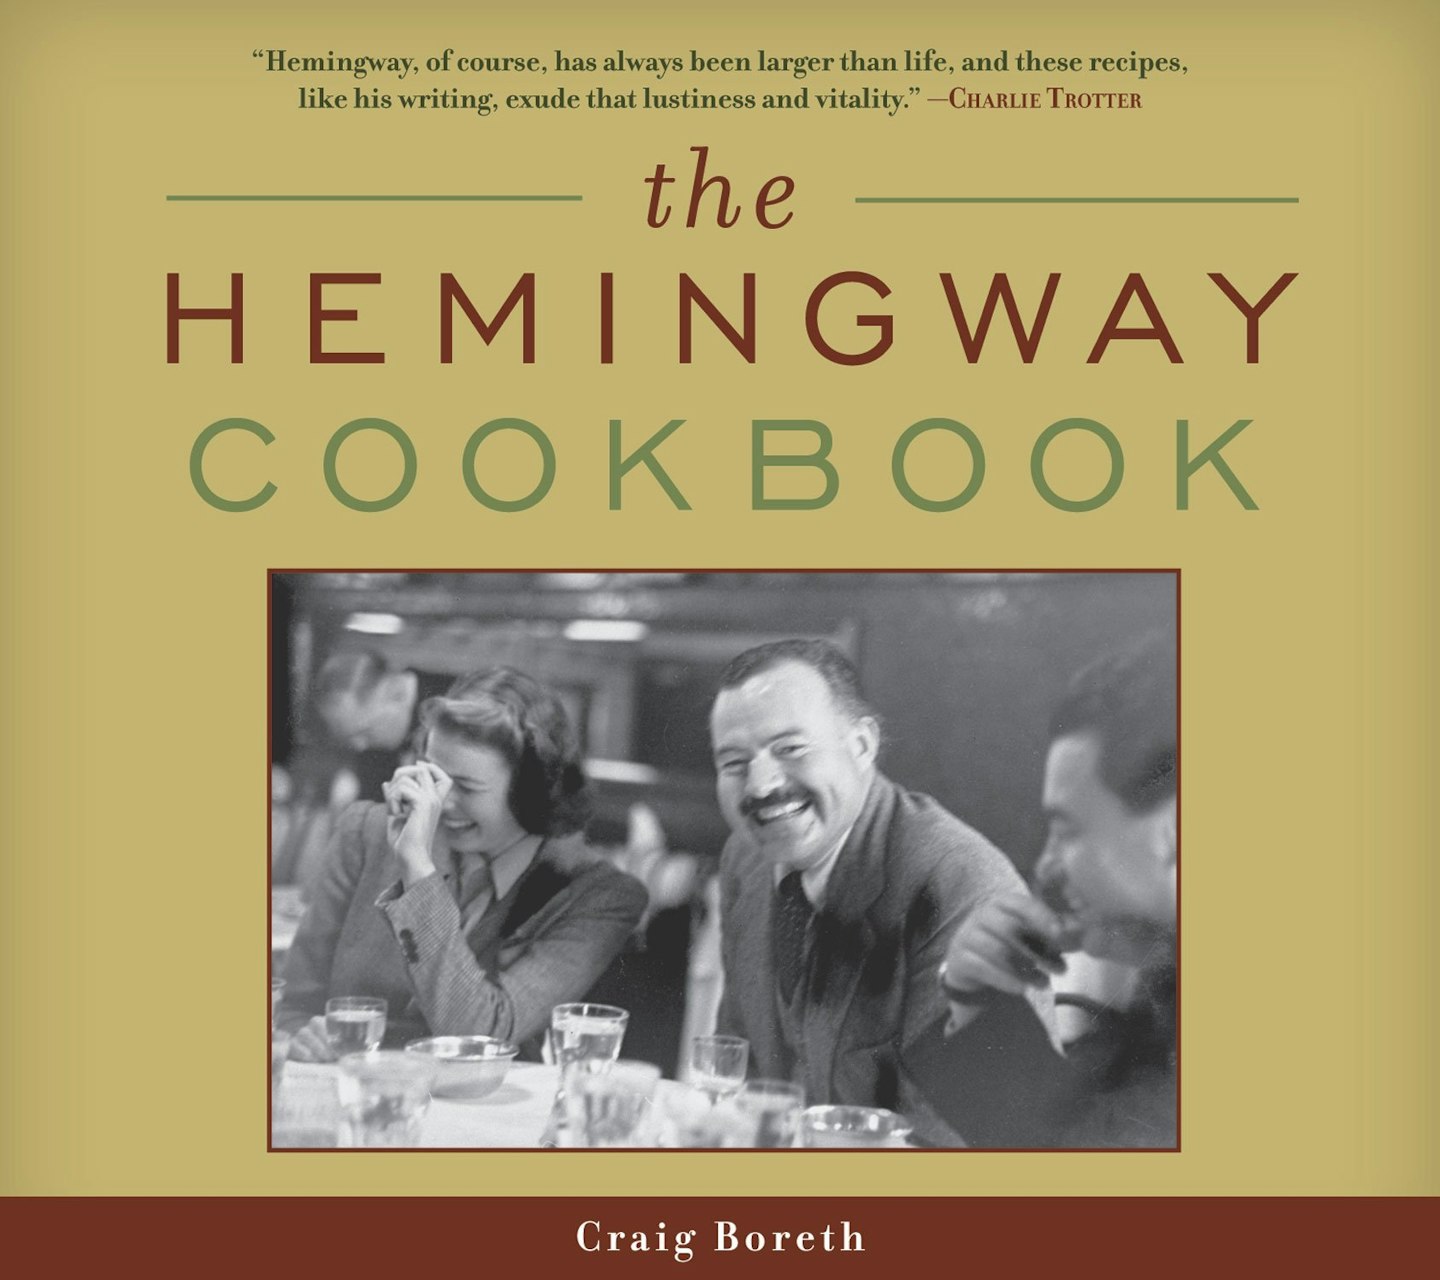 The Hemingway Cookbook, by Craig Boreth